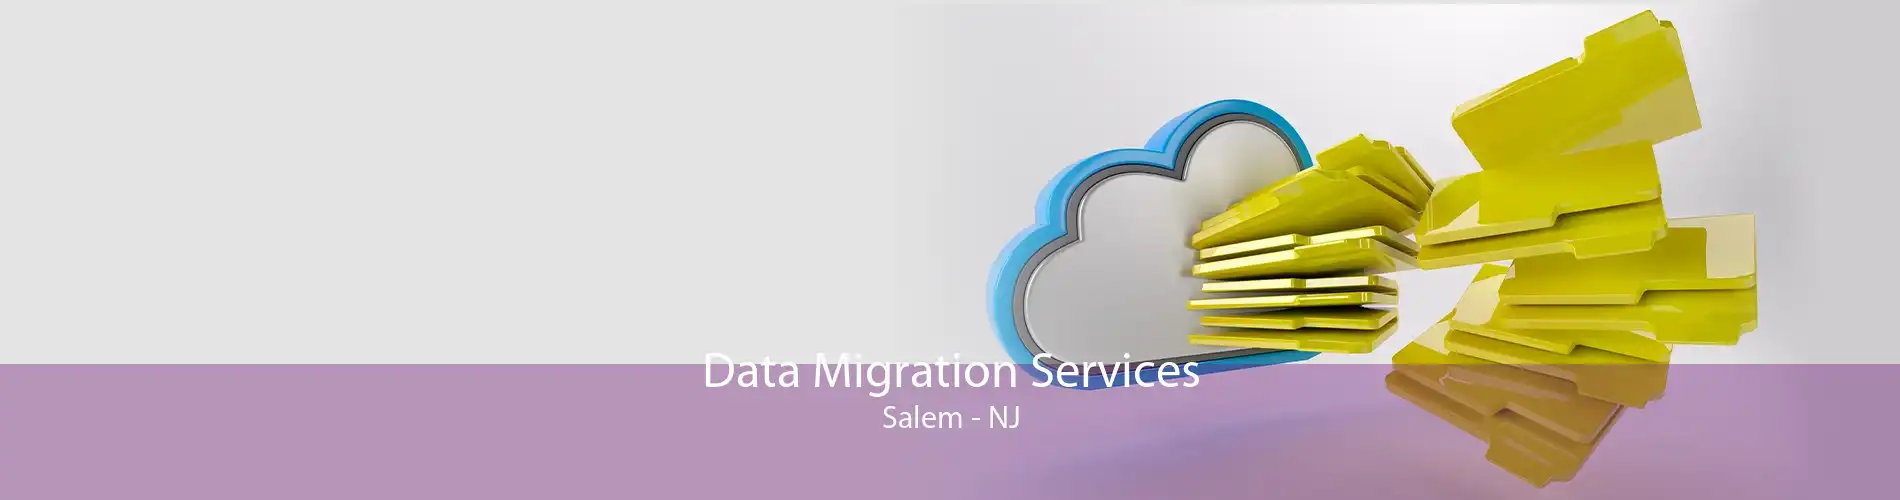 Data Migration Services Salem - NJ